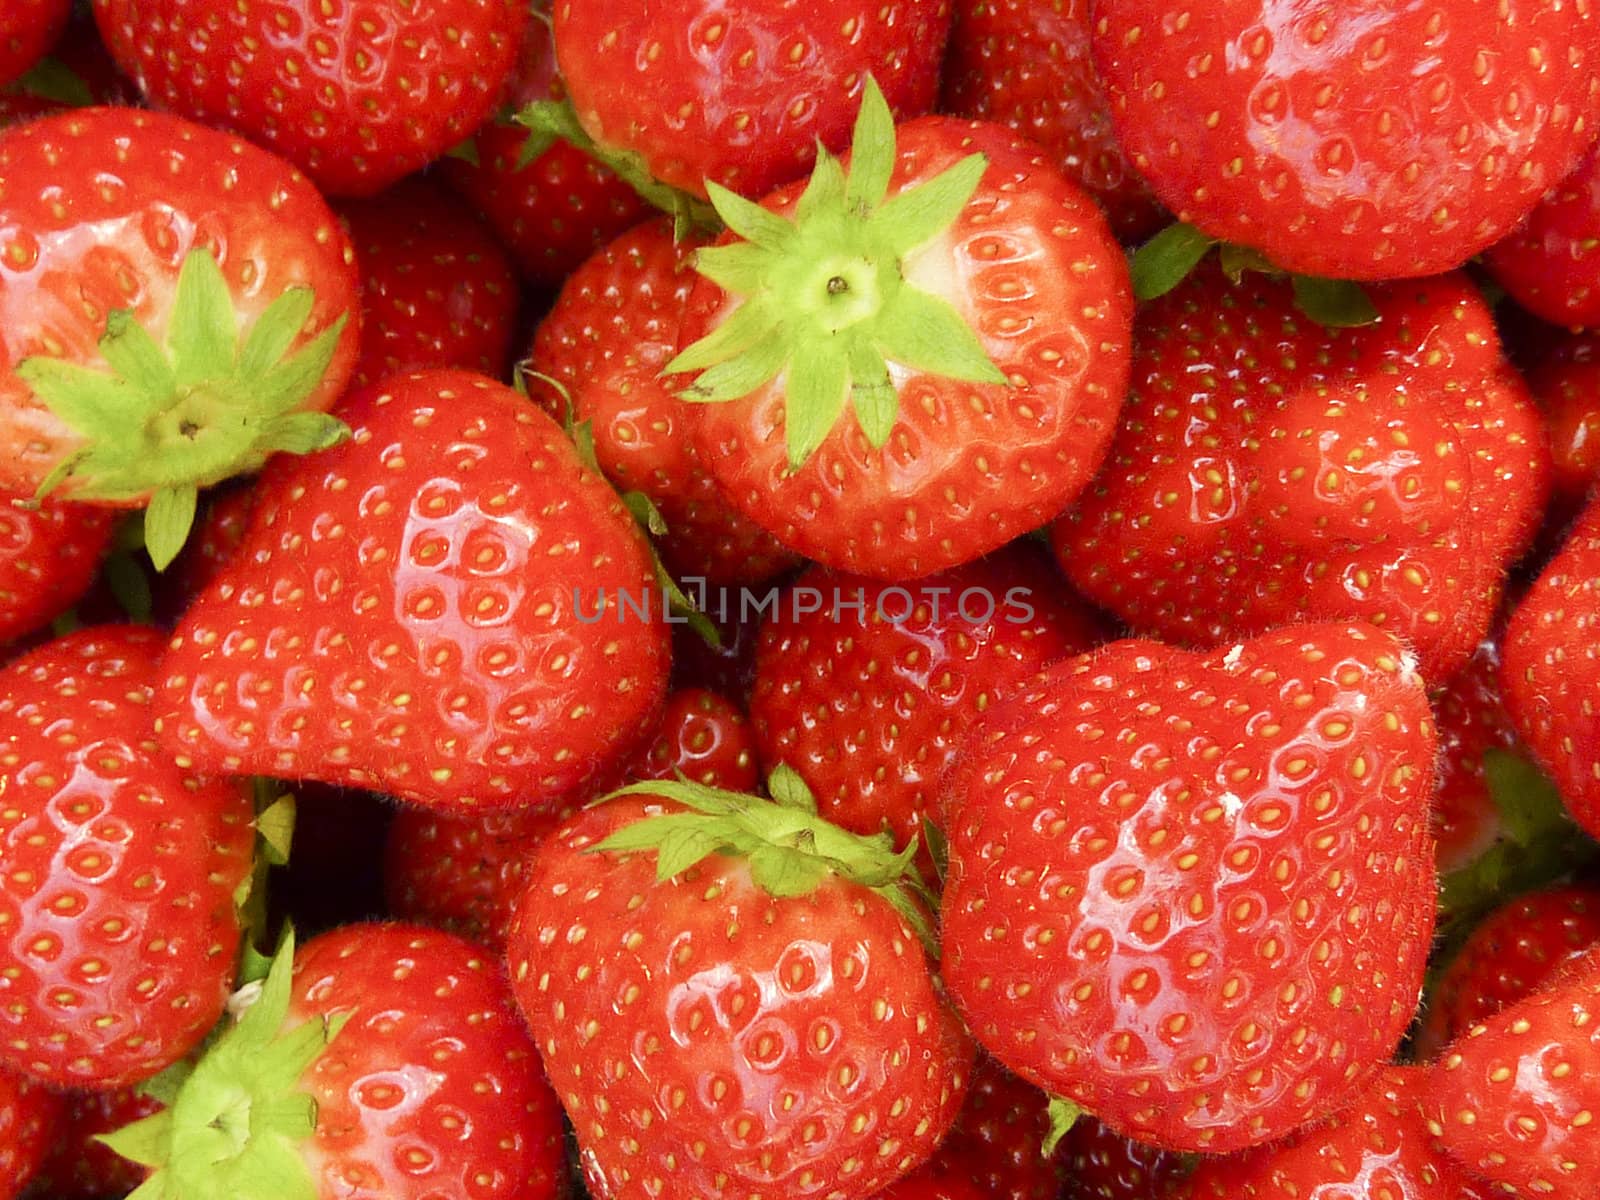 Strawberries by yorkman